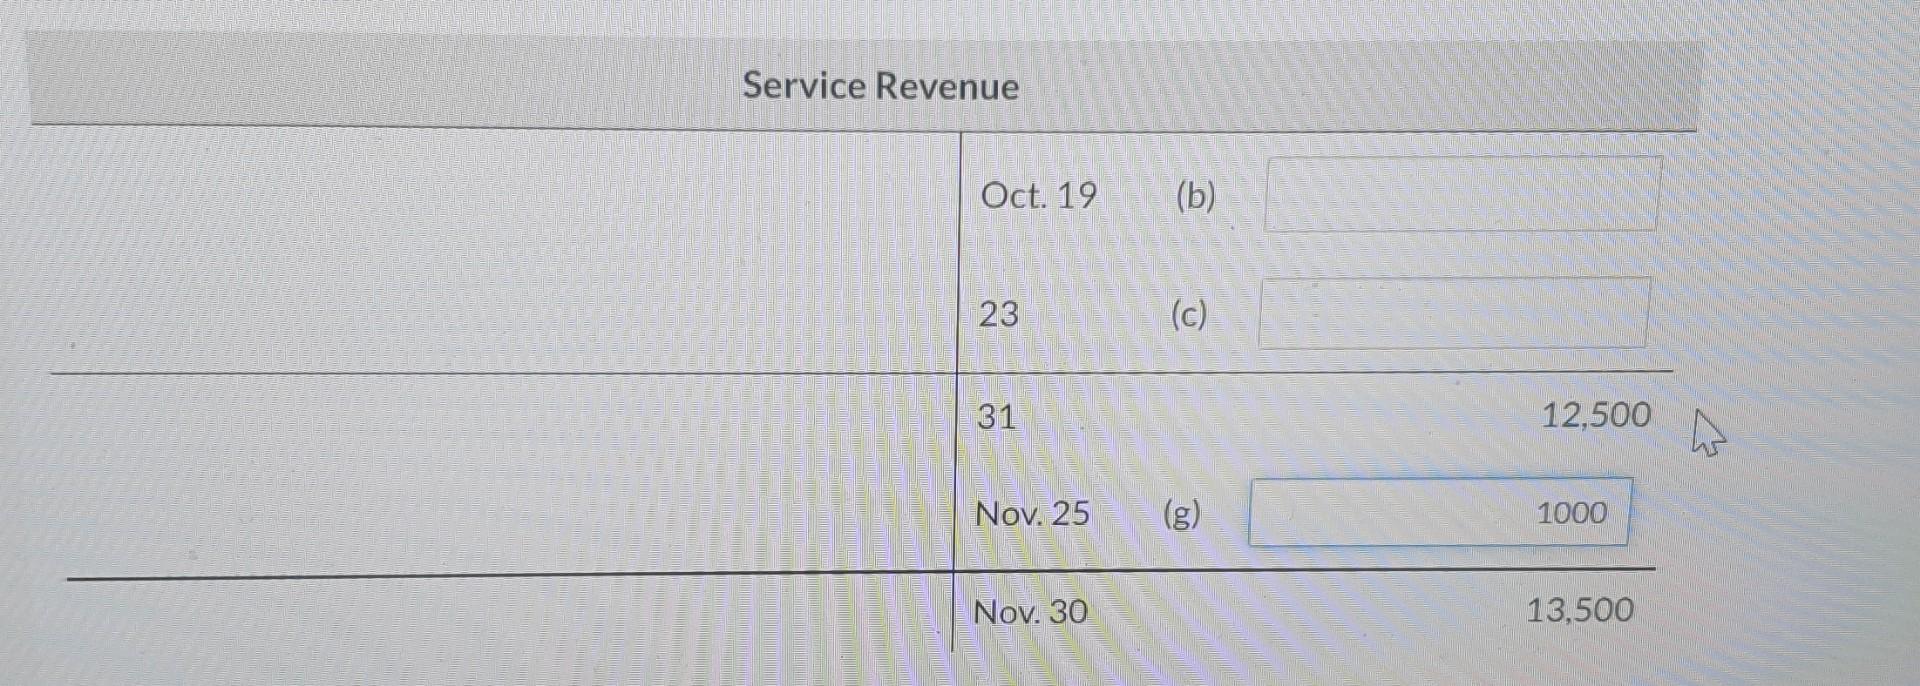 Service Revenue begin{tabular}{l|lll} hline & Oct. 19 & (b)  23 & (c) & & 12,500  hline & 31 & Nov. 25 & (g)  hline